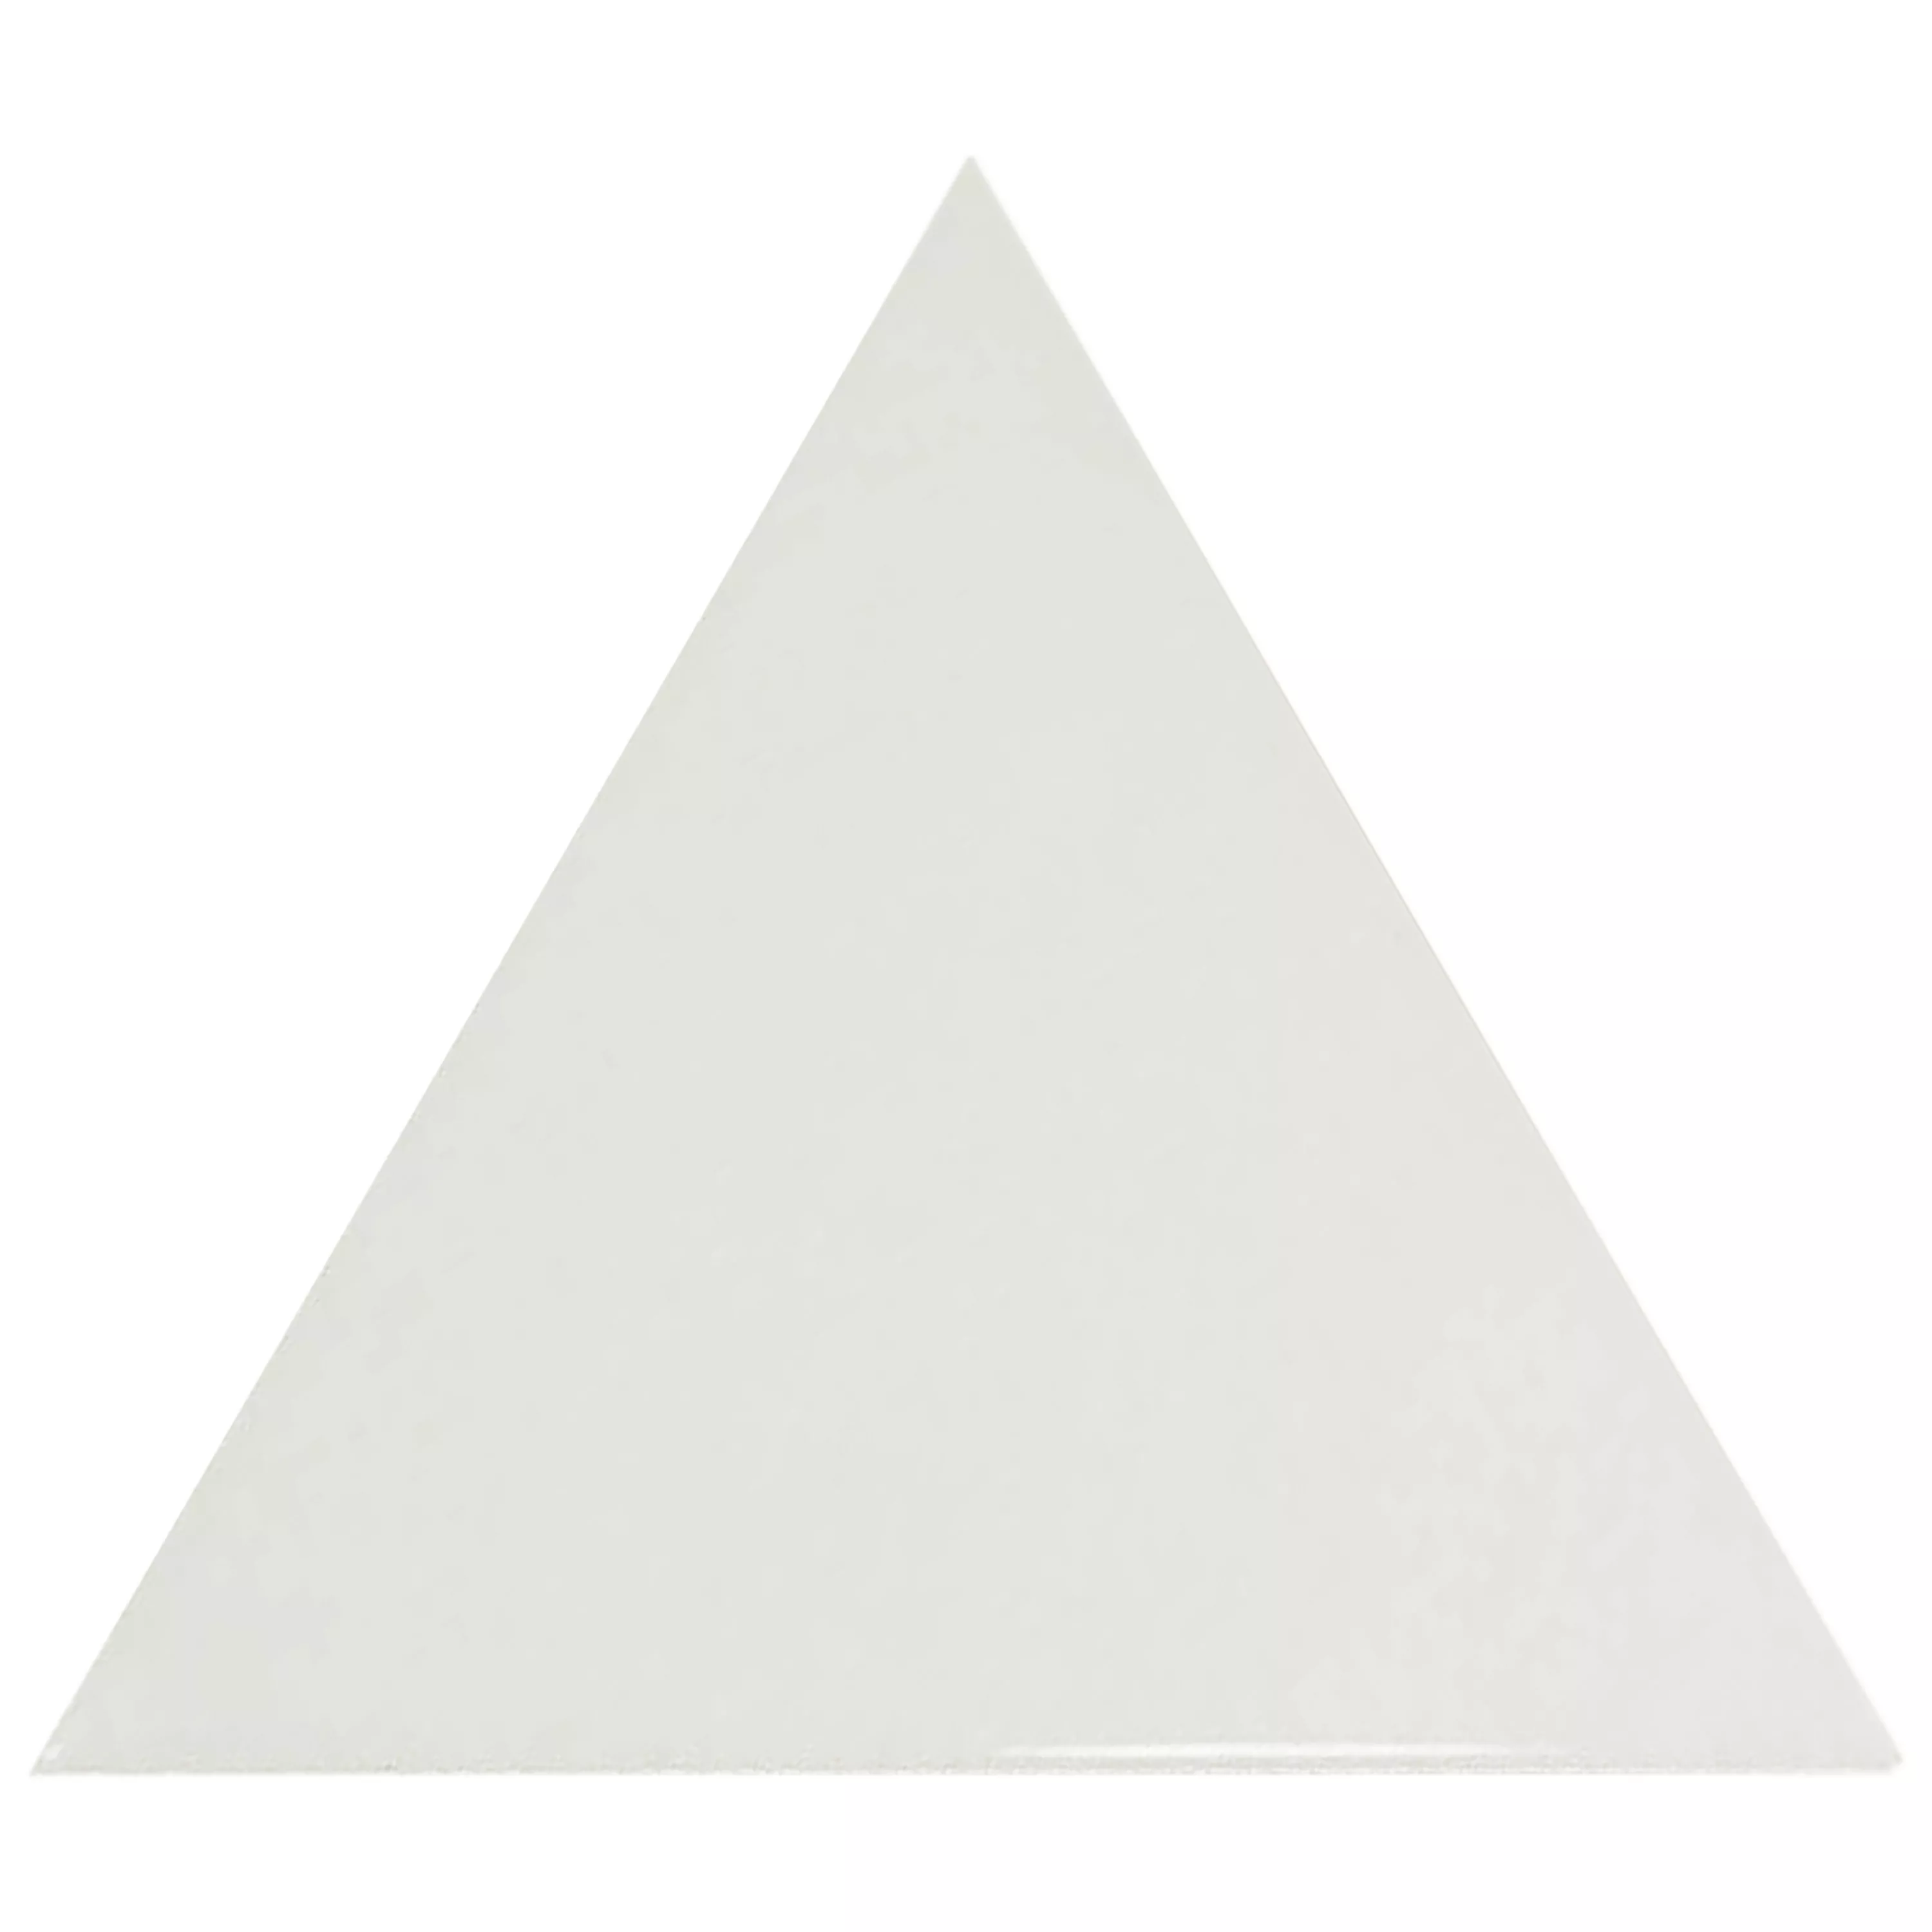 Sample Wall Tiles Britannia Triangle 10,8x12,4cm Light Grey